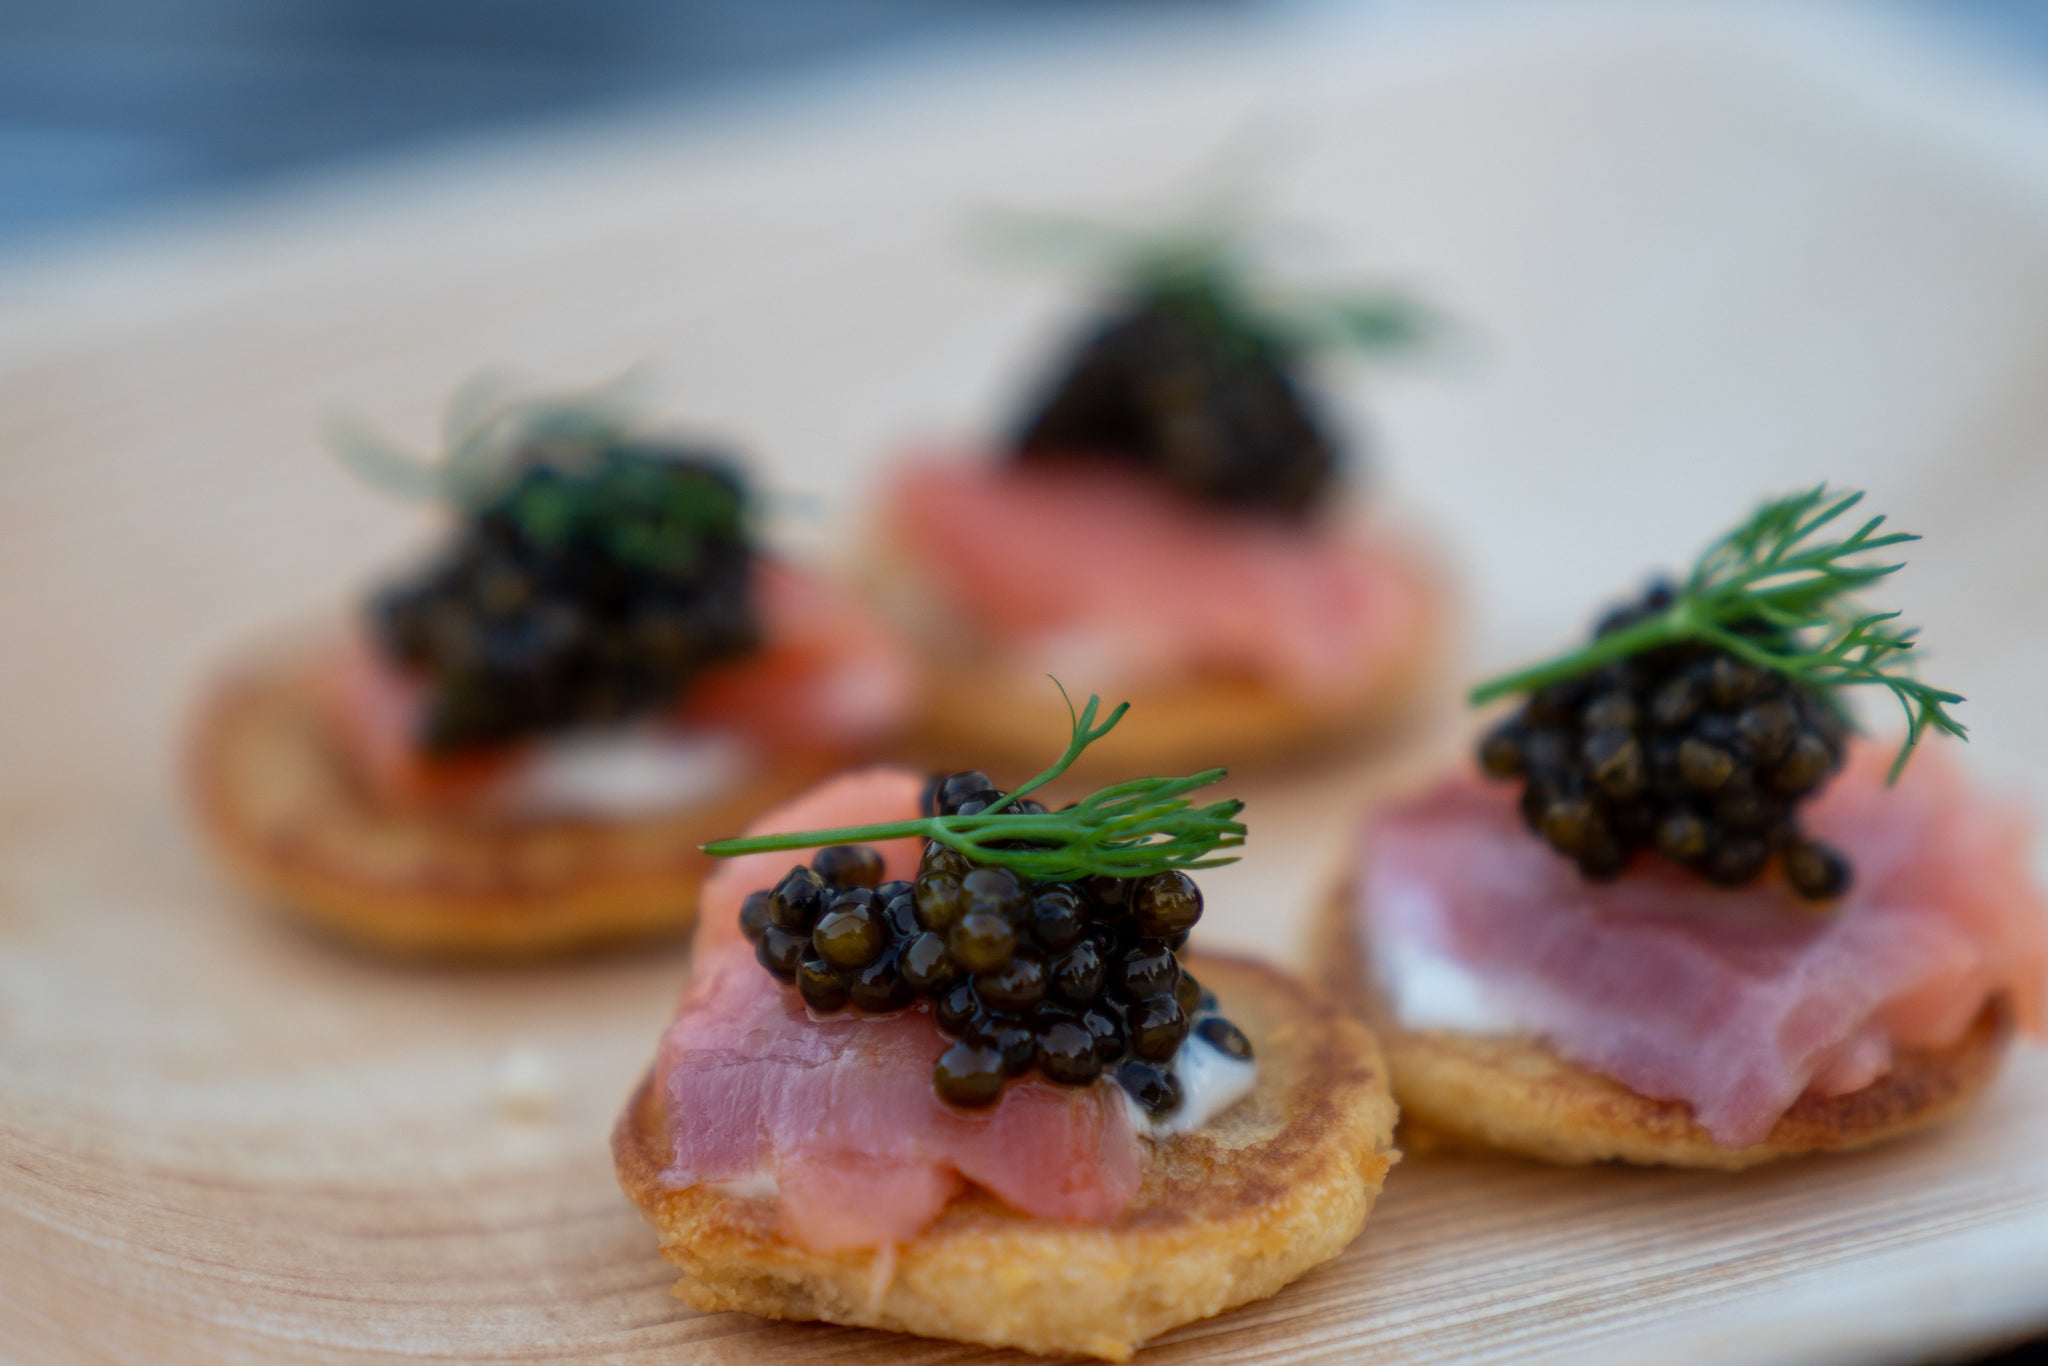 Caviar is a nutritional bomb